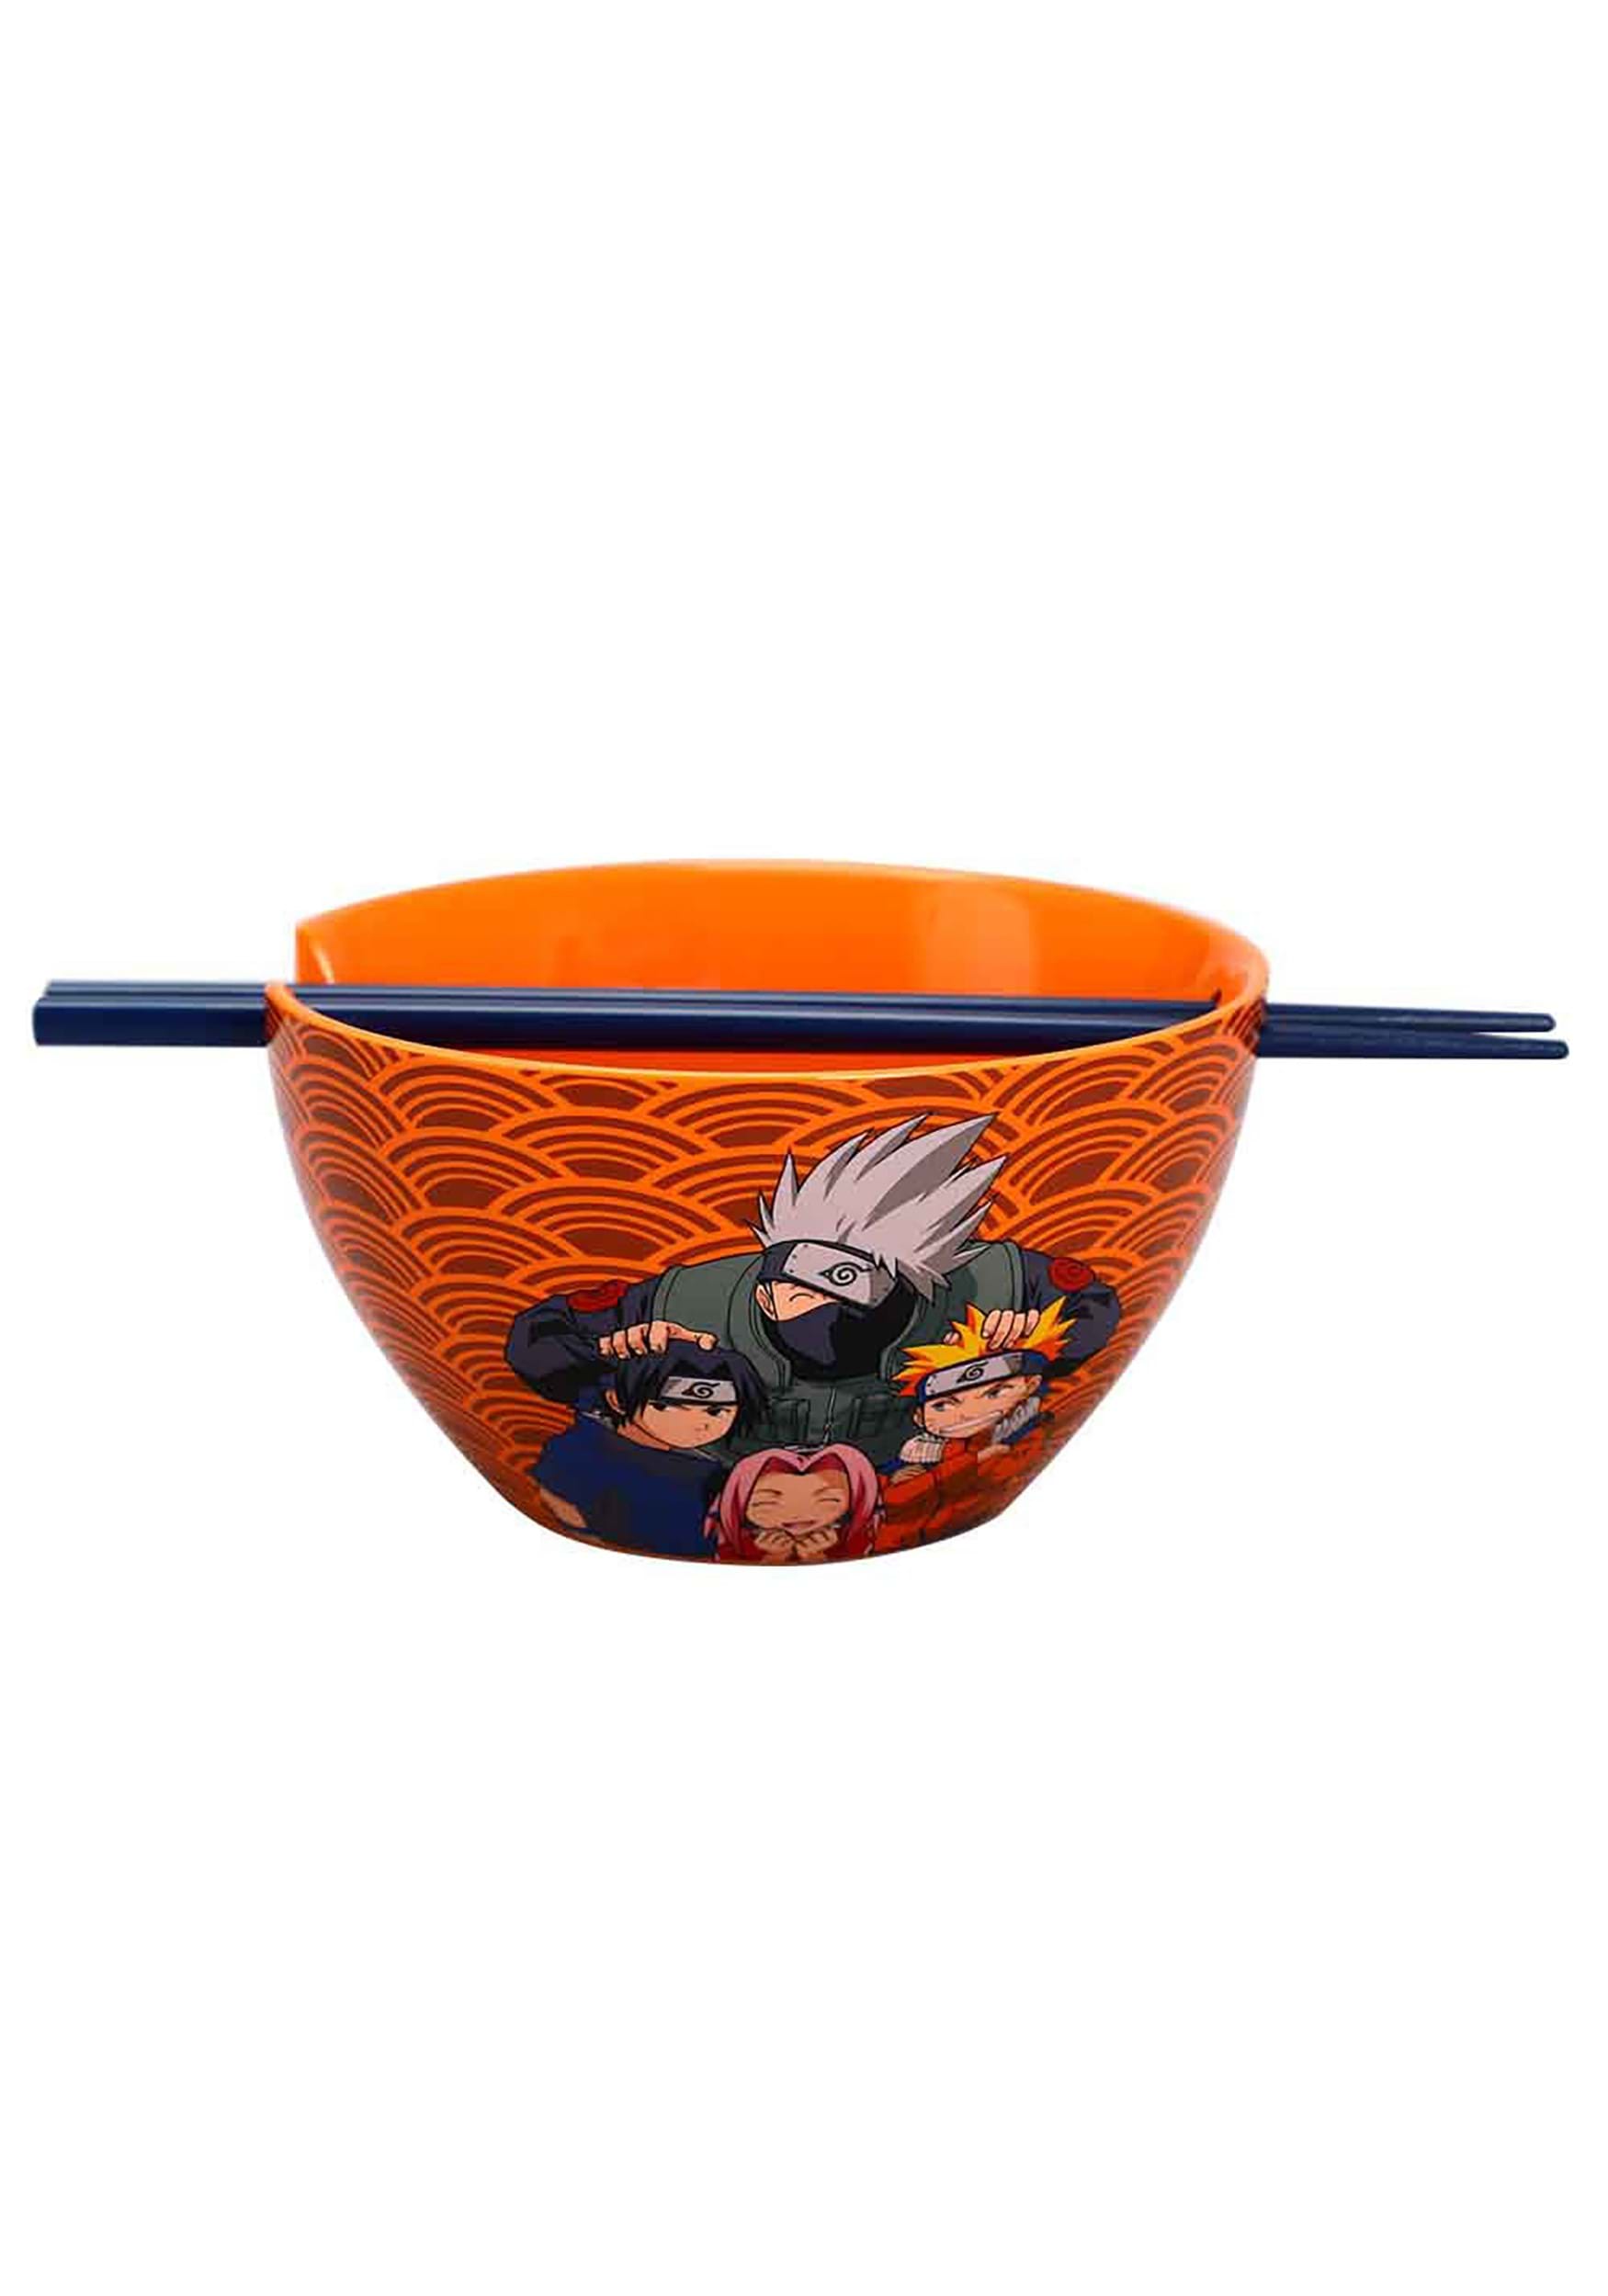 Naruto Characters Ramen Bowl with Chopsticks